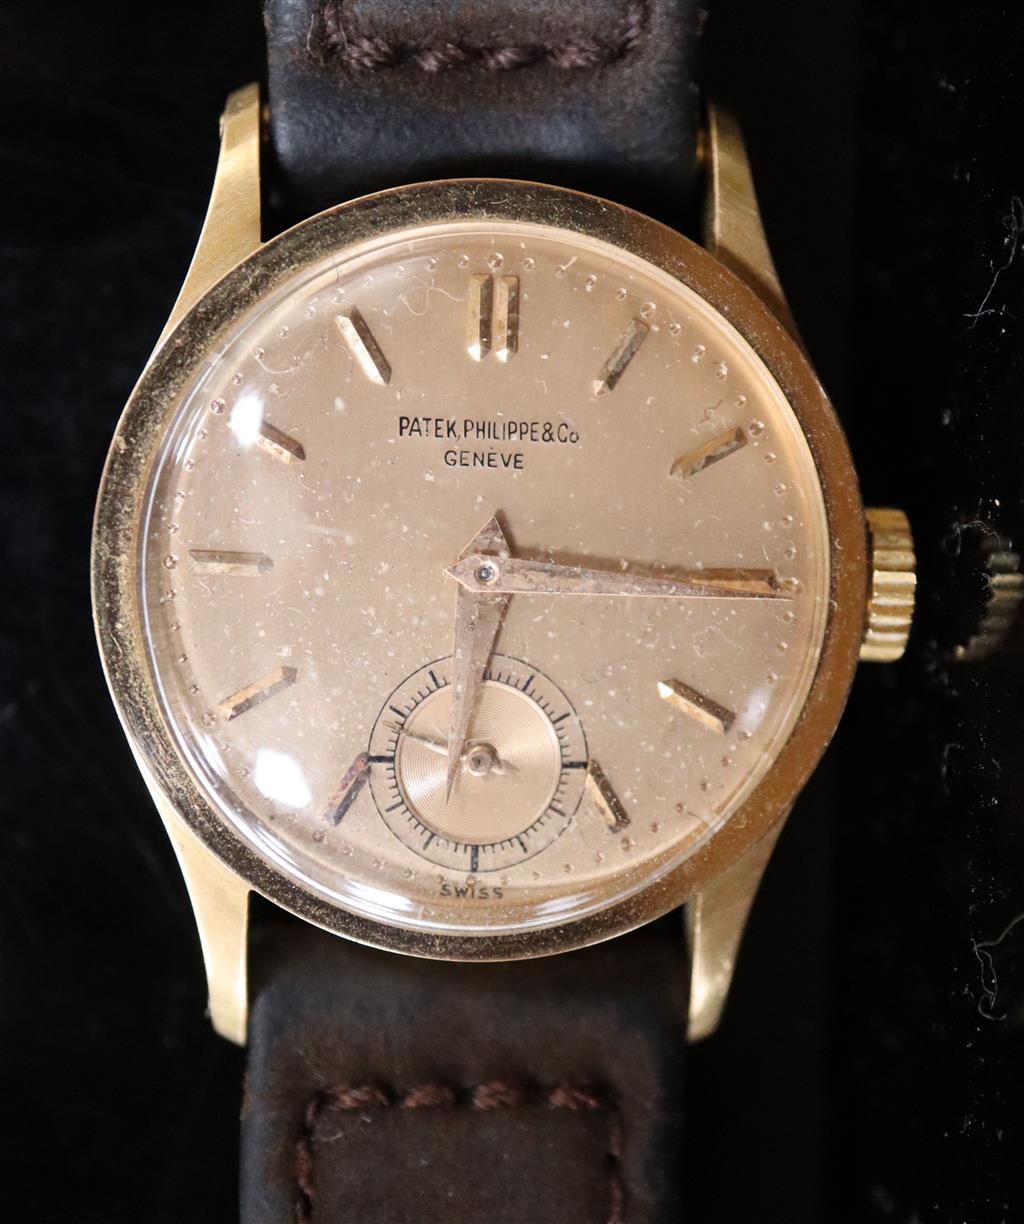 A gentlemans 18k gold Patek Philippe & Co manual wind wrist watch,